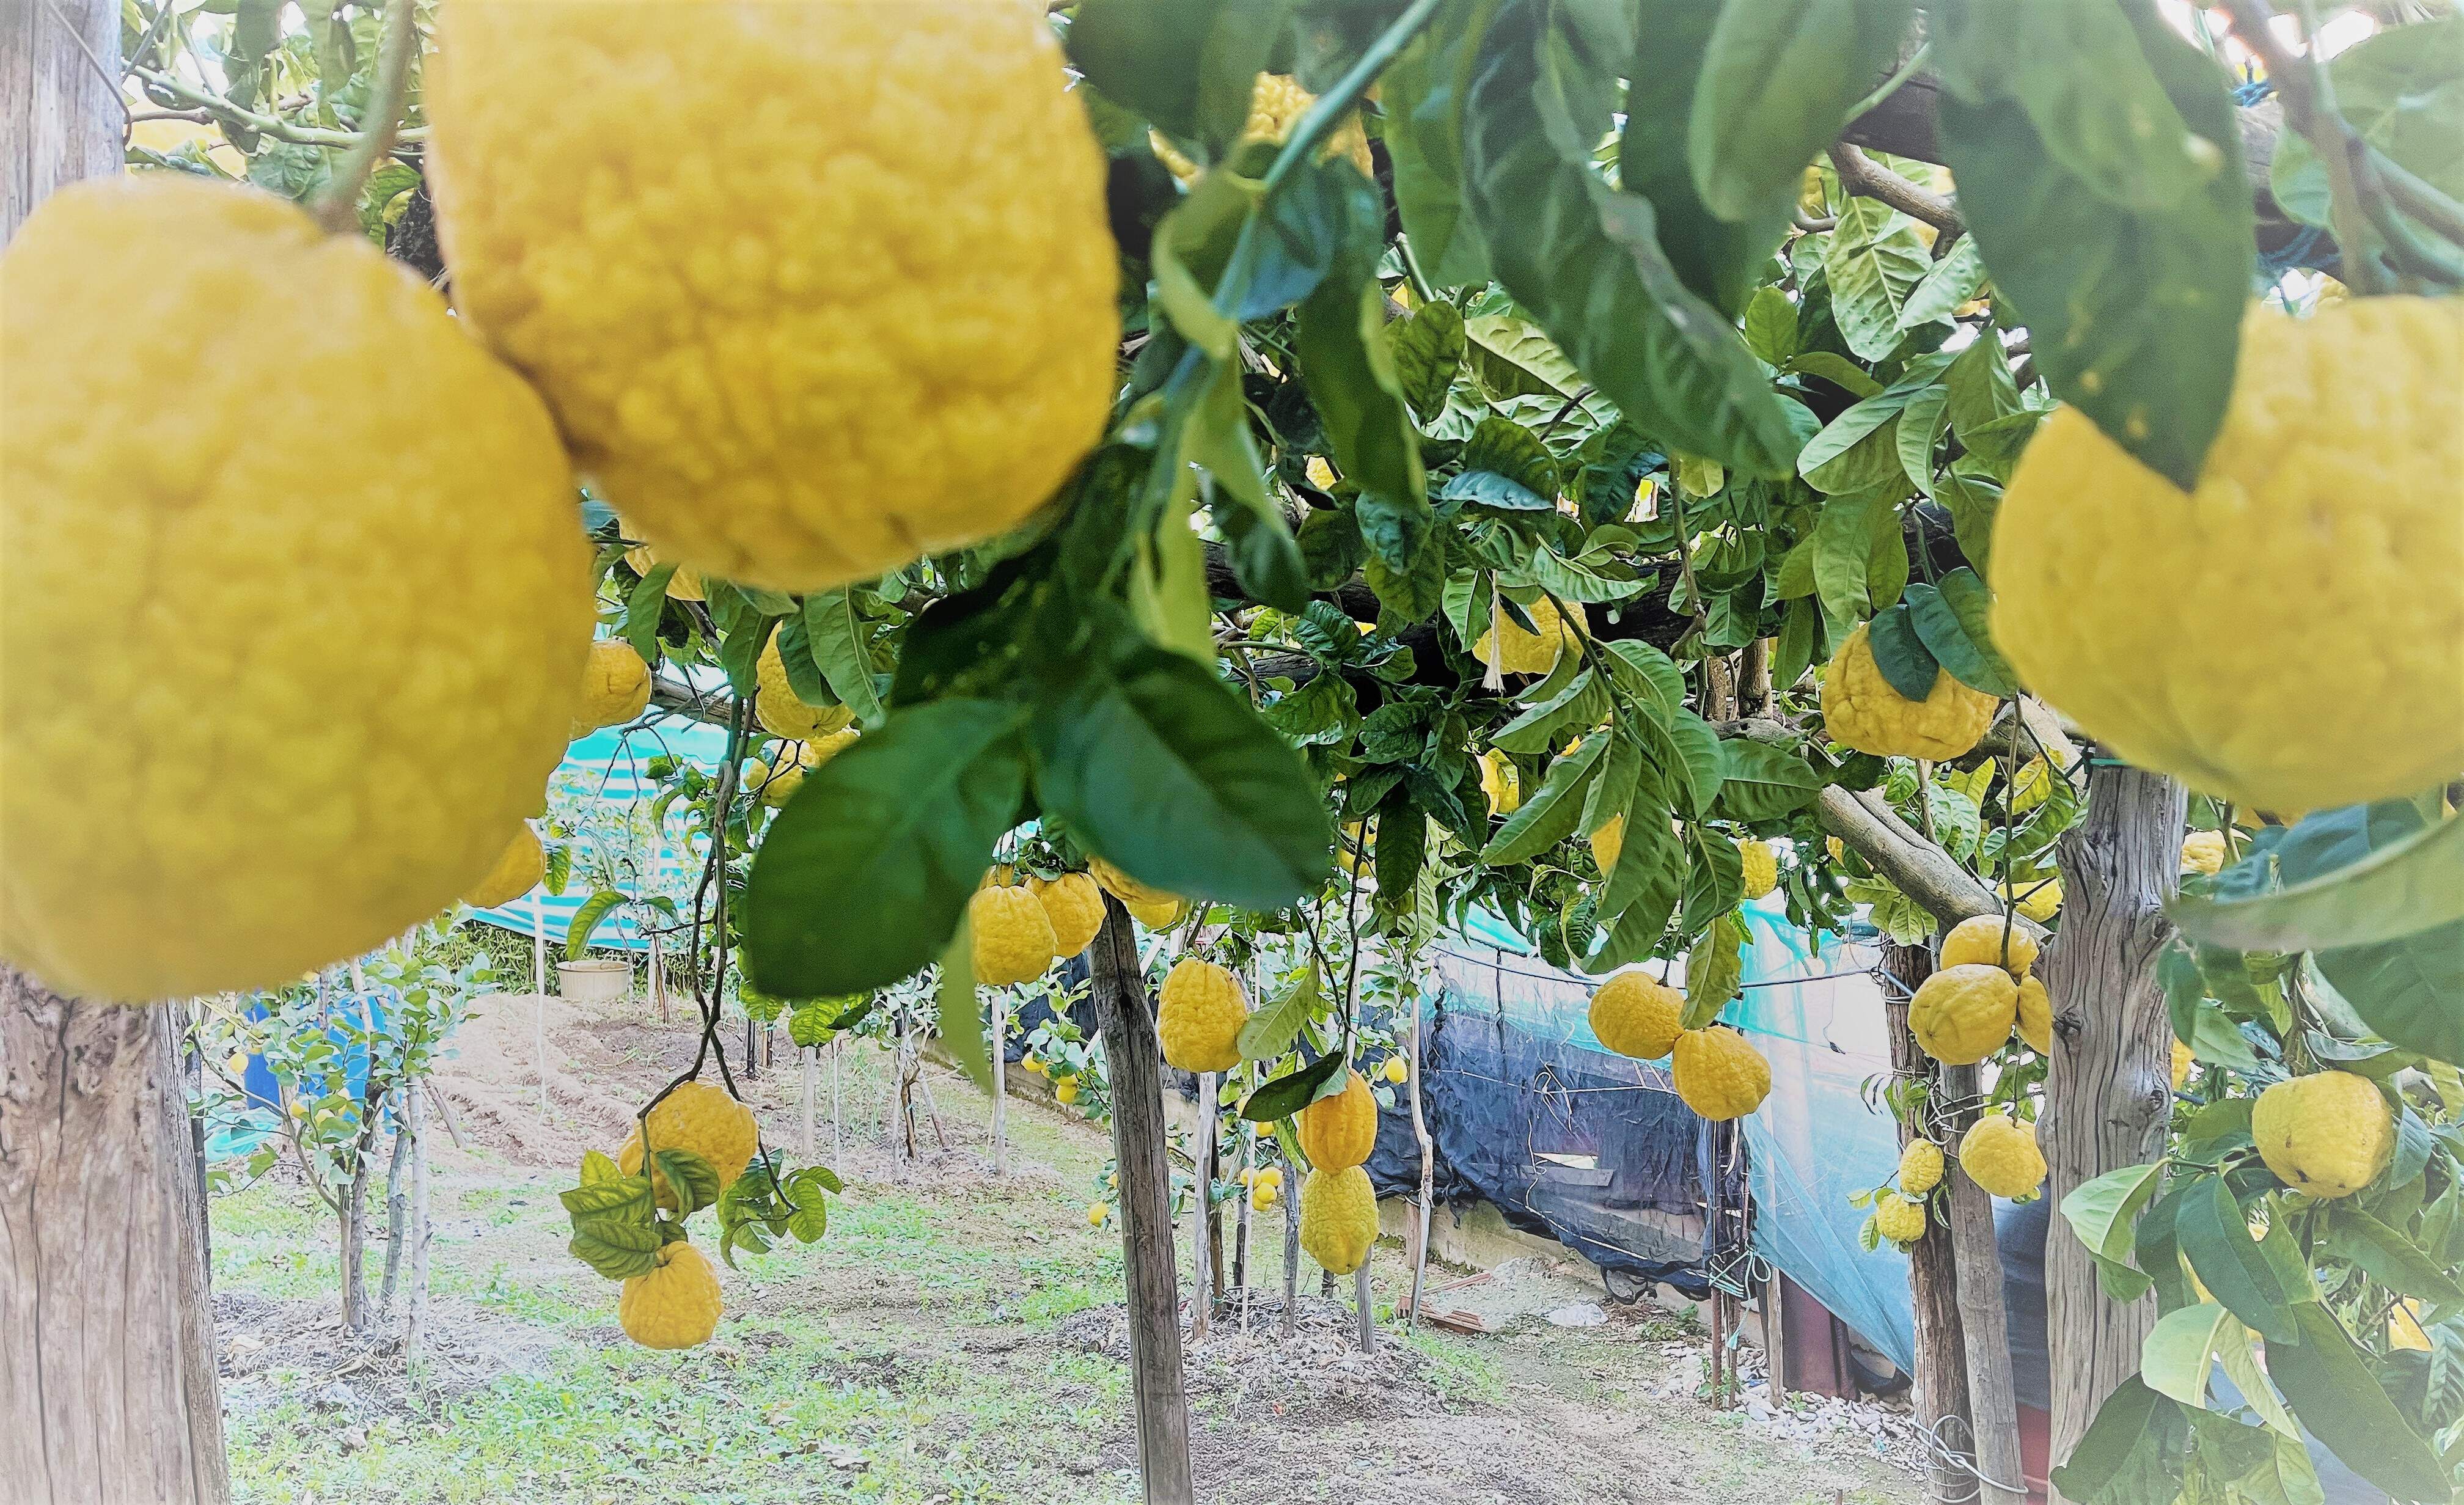 Amalfi Coast Lemons Information and Facts